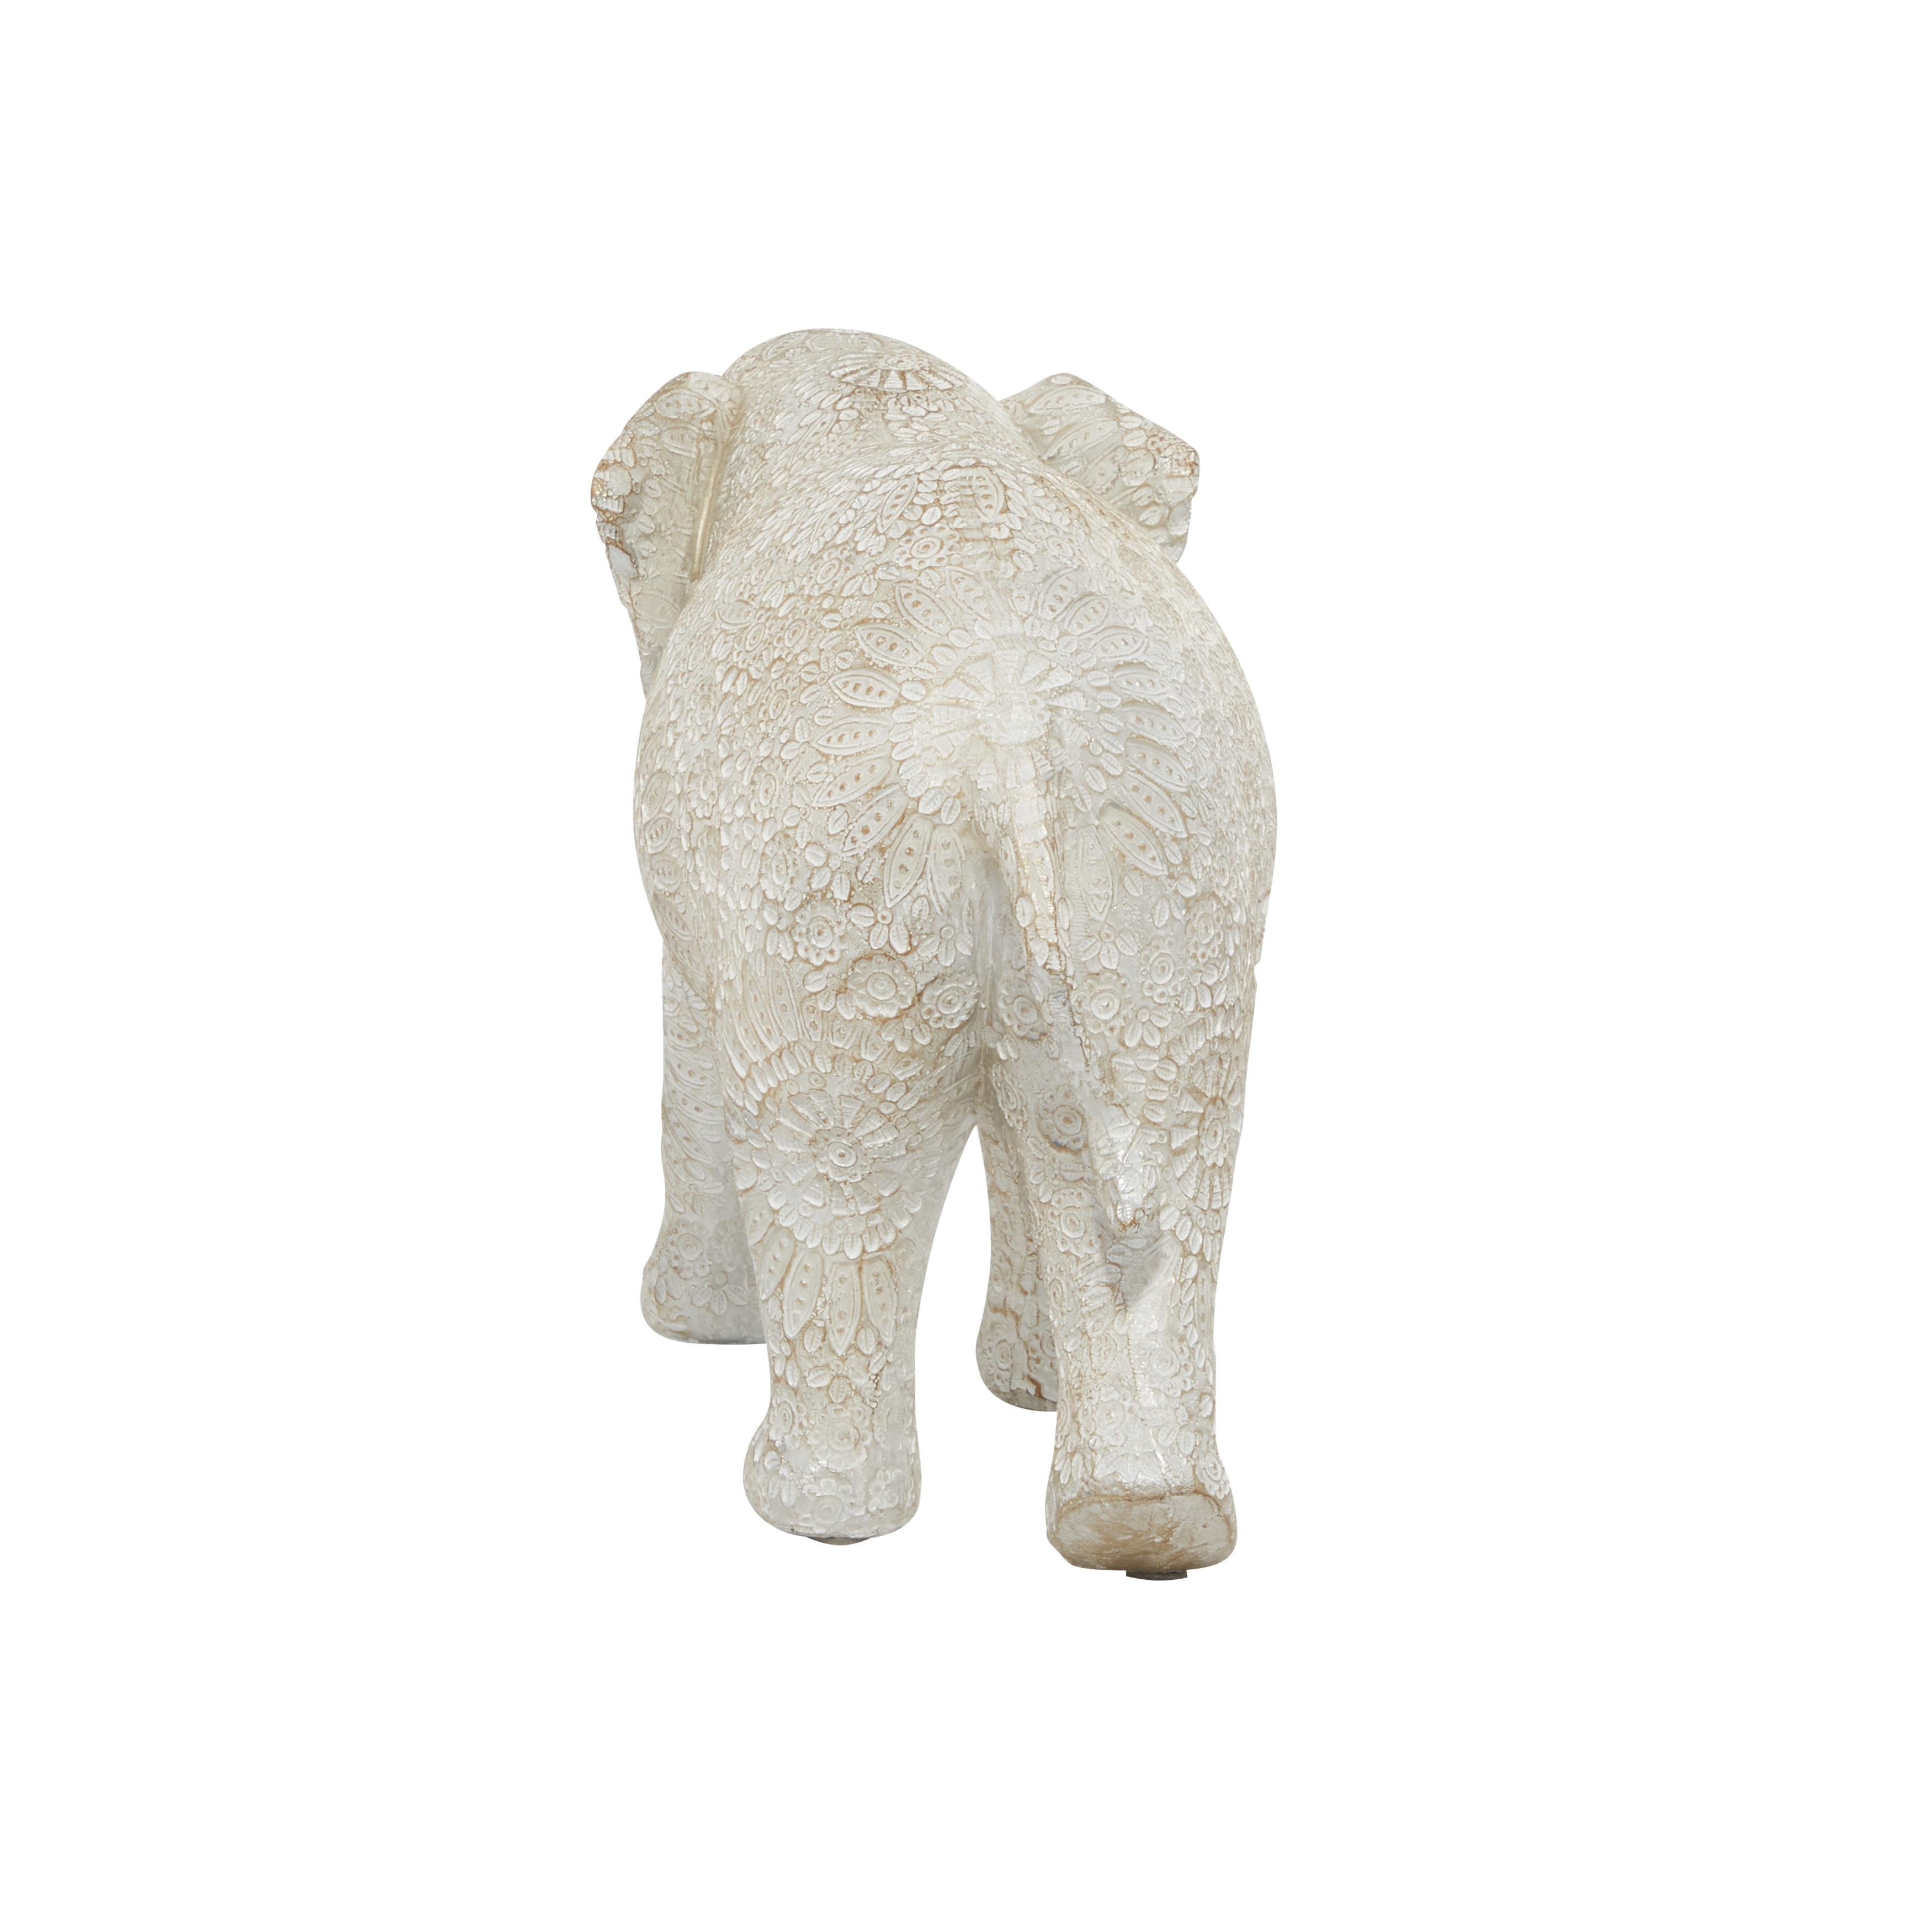 White Polystone Elephant Sculpture - 5 x 14 x 9